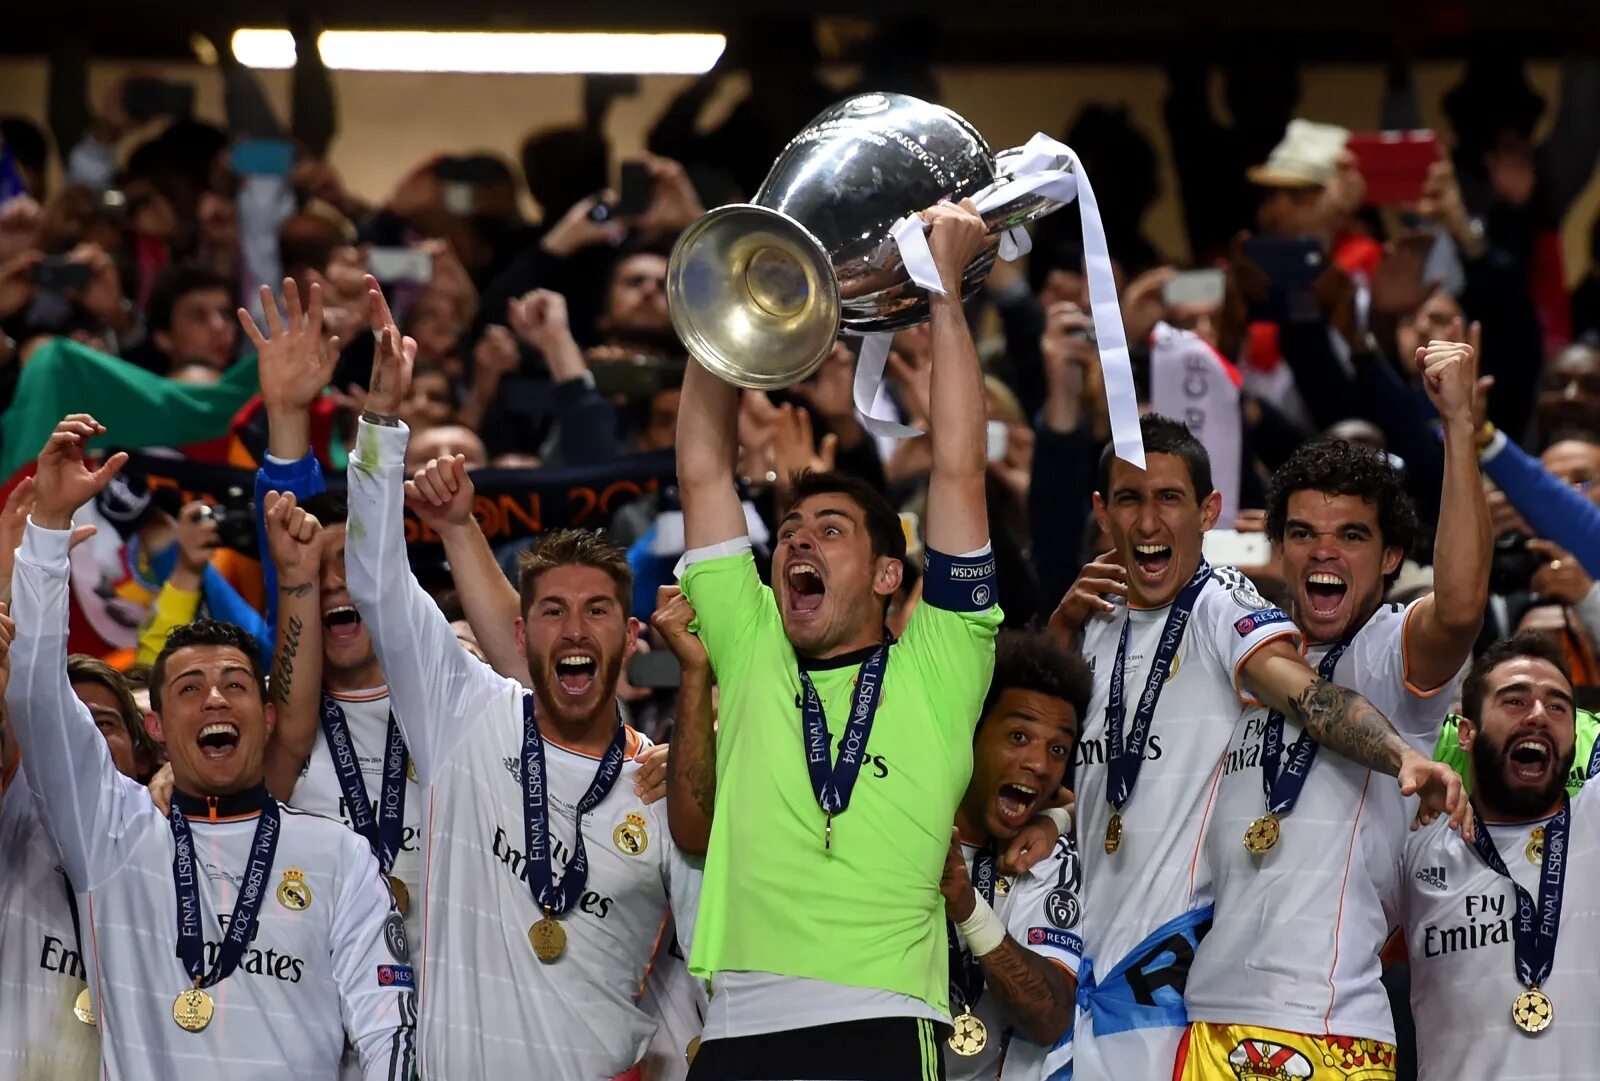 Реал Мадрид 2014 лига чемпионов. Реал Мадрид финал ЛЧ 2014. Реал Мадрид лига чемпионов 2014 финал. Финал Лиги чемпионов 2014 Реал Атлетико.